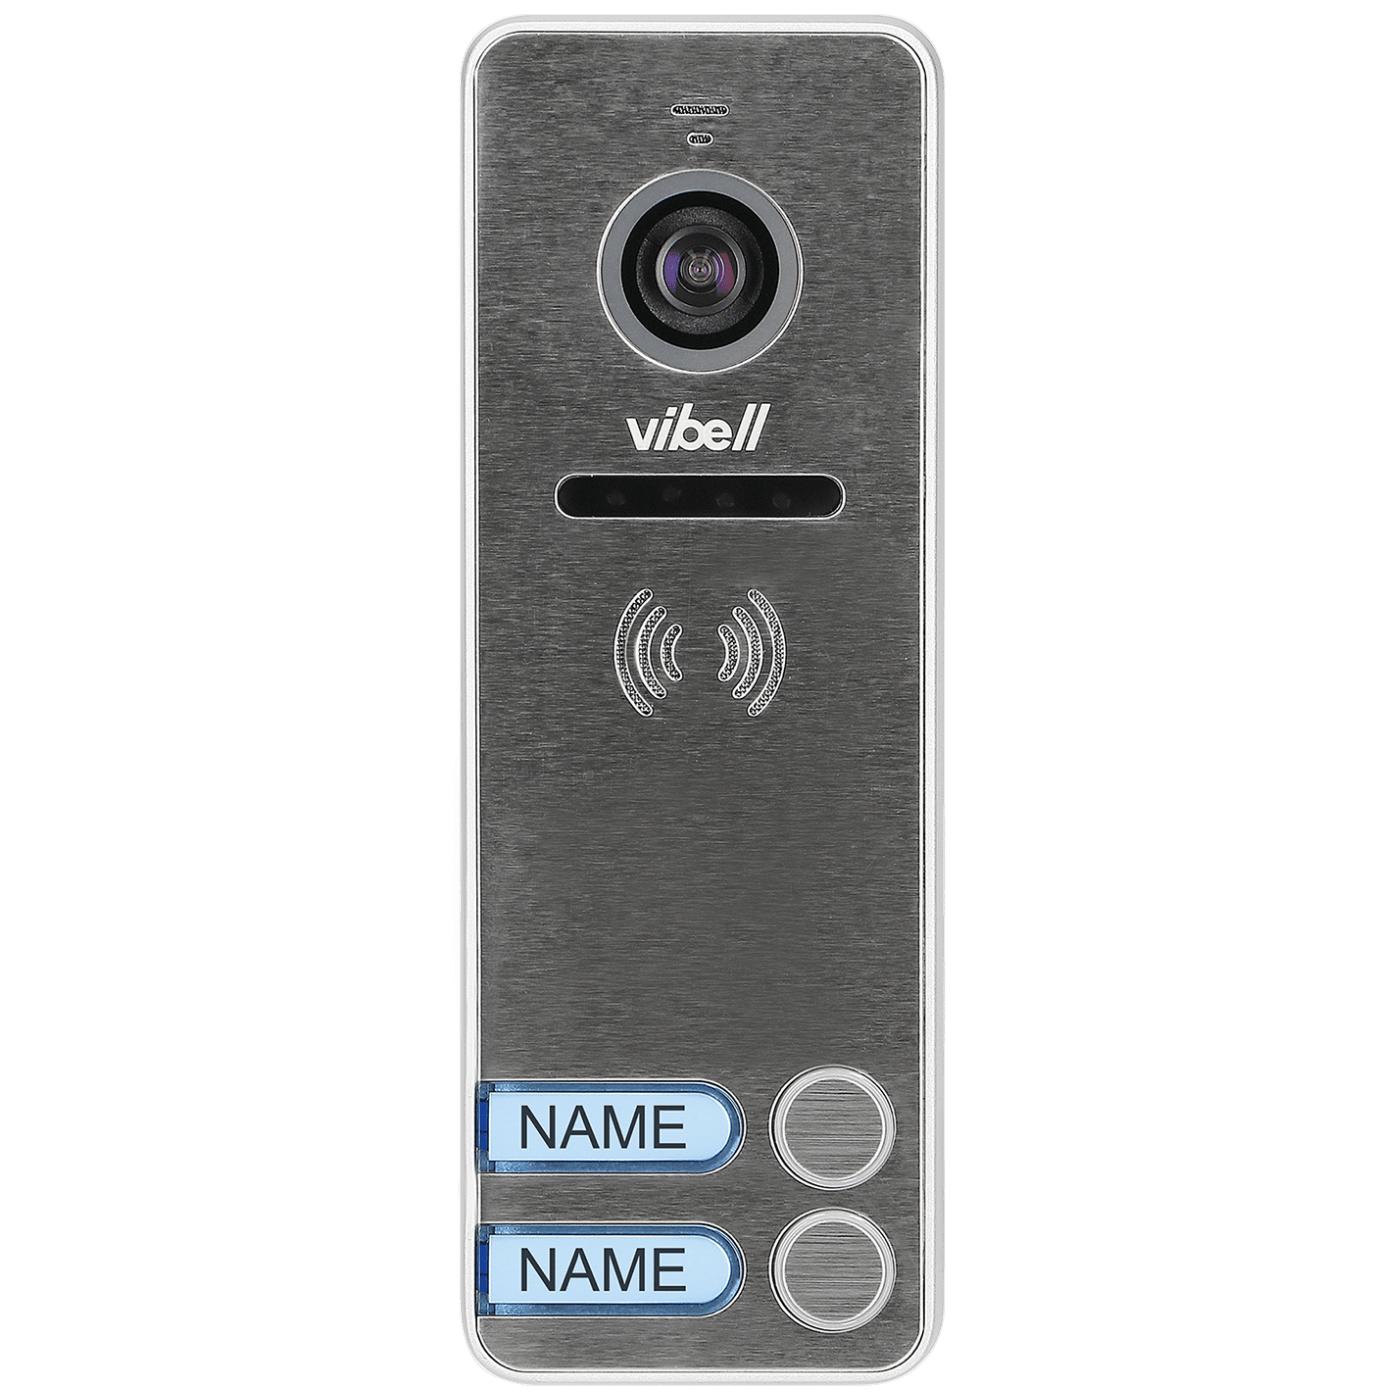 Video interfon, kamera, vanjska jedinica, Vibell 2 series